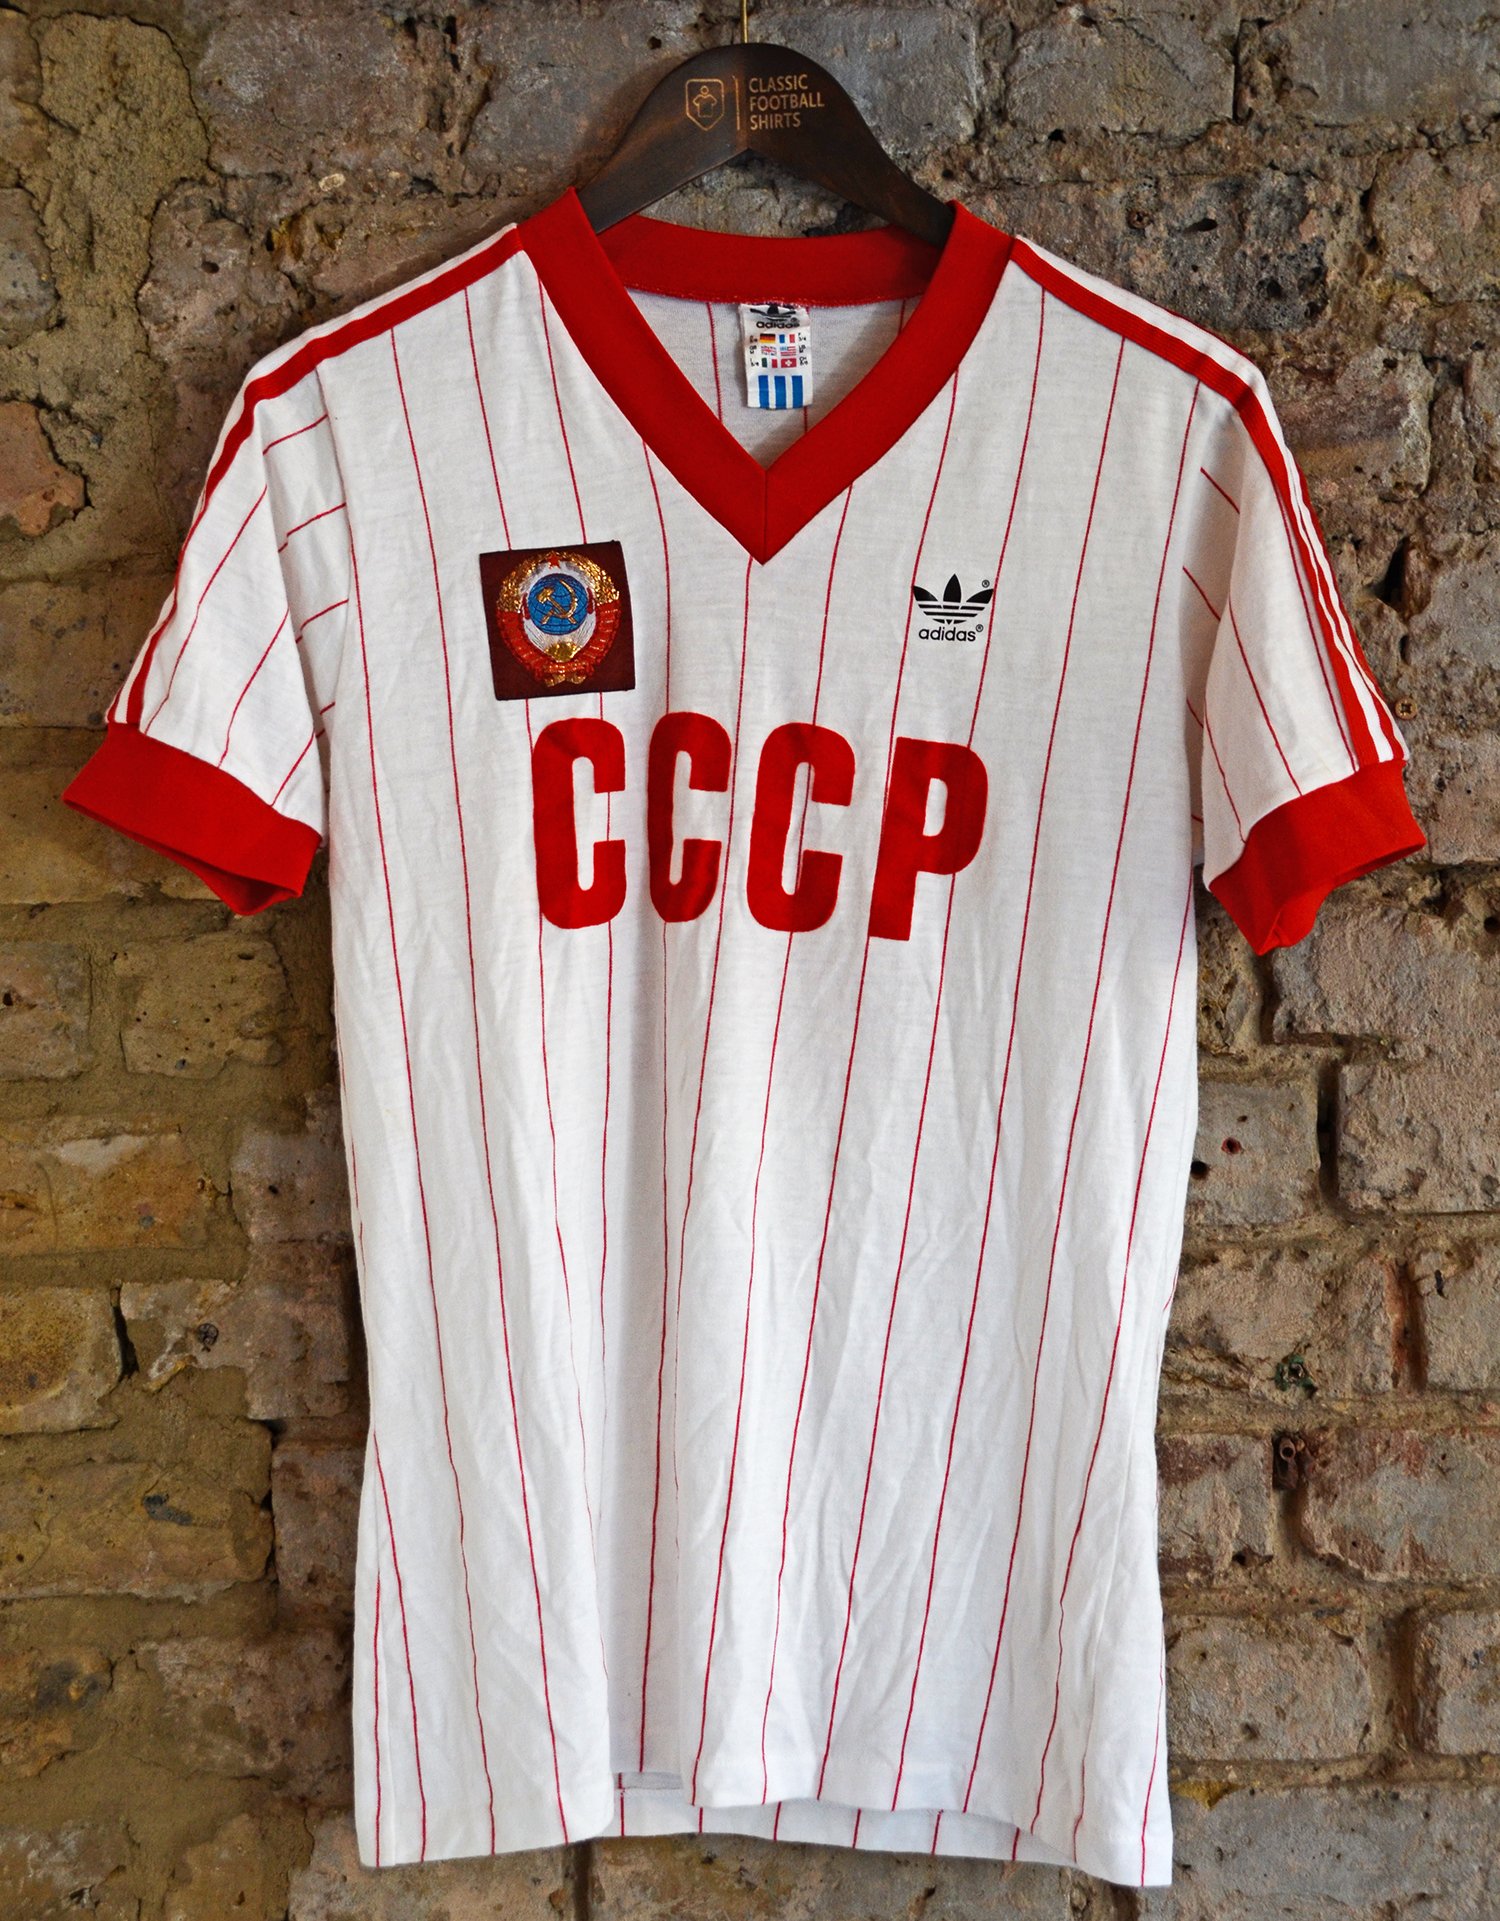 Figura precisamente Naufragio Classic Football Shirts on Twitter: "CCCP x Adidas https://t.co/ZYk0by7o9r"  / Twitter